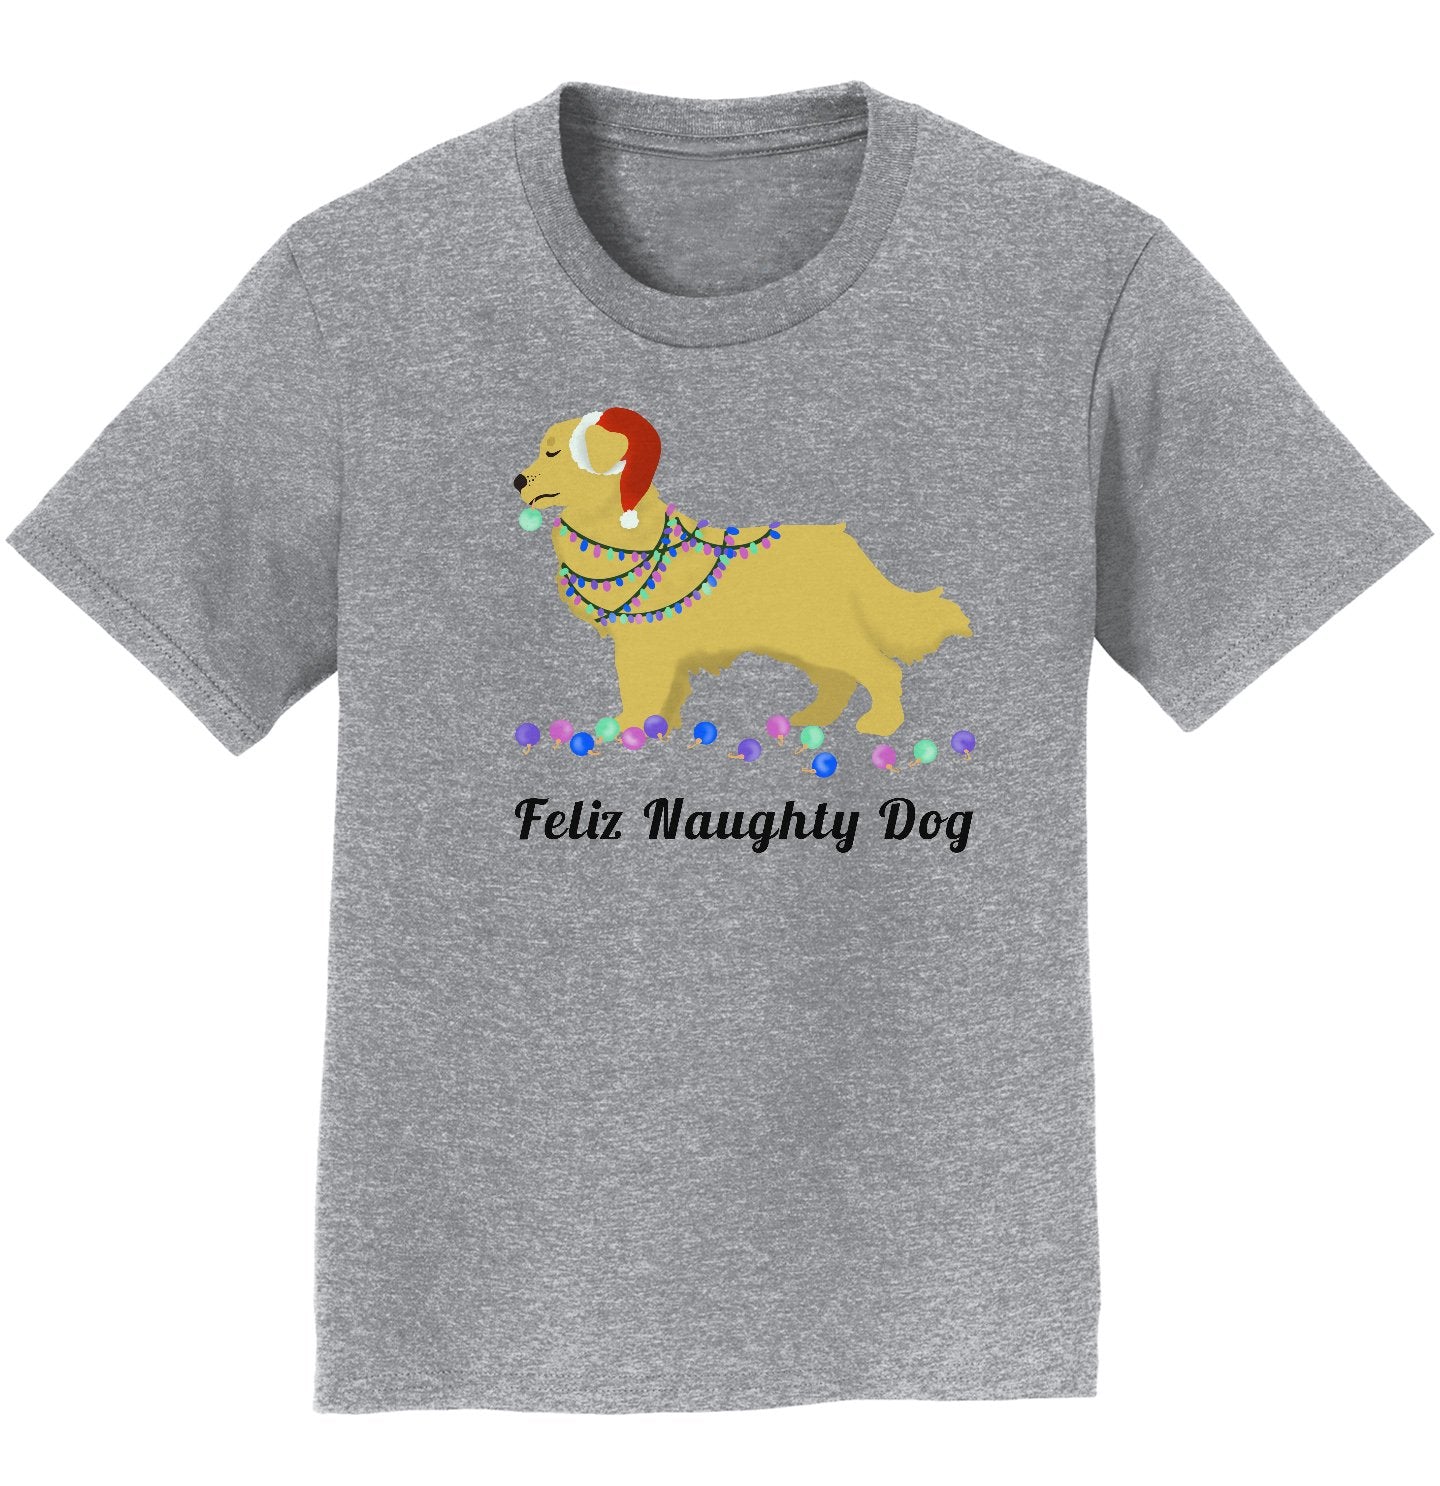 Feliz Naughty Dog Golden Retriever - Kids' Unisex T-Shirt